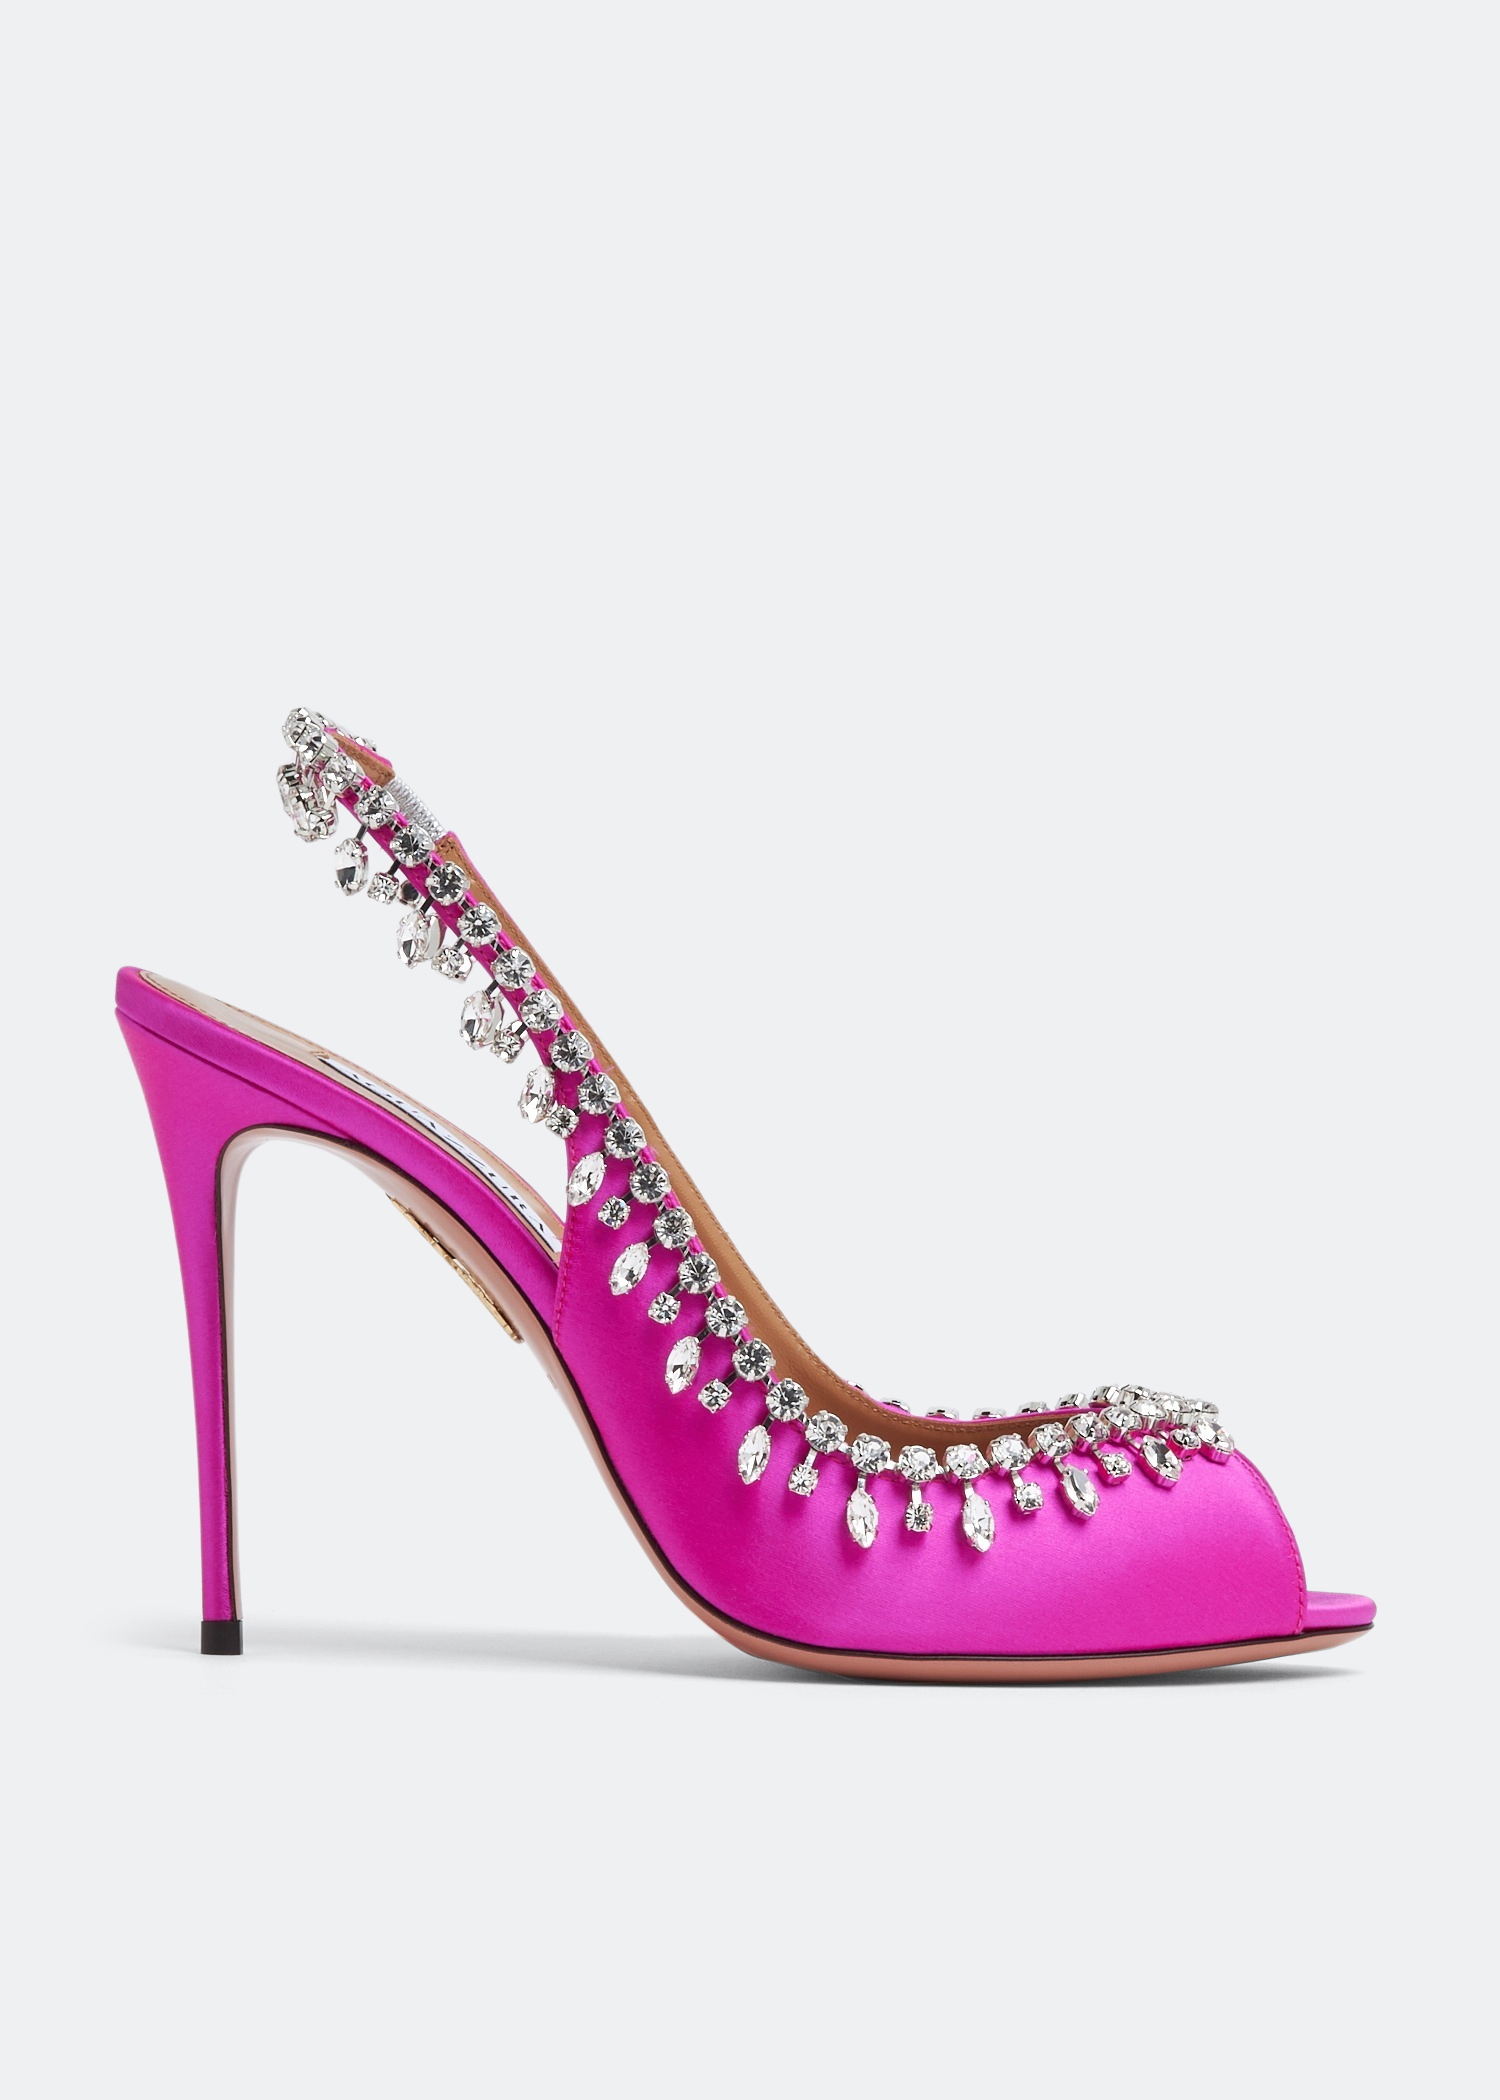 crystal | for Women Temptation Pink 105 - Level Aquazzura UAE Shoes in sandals